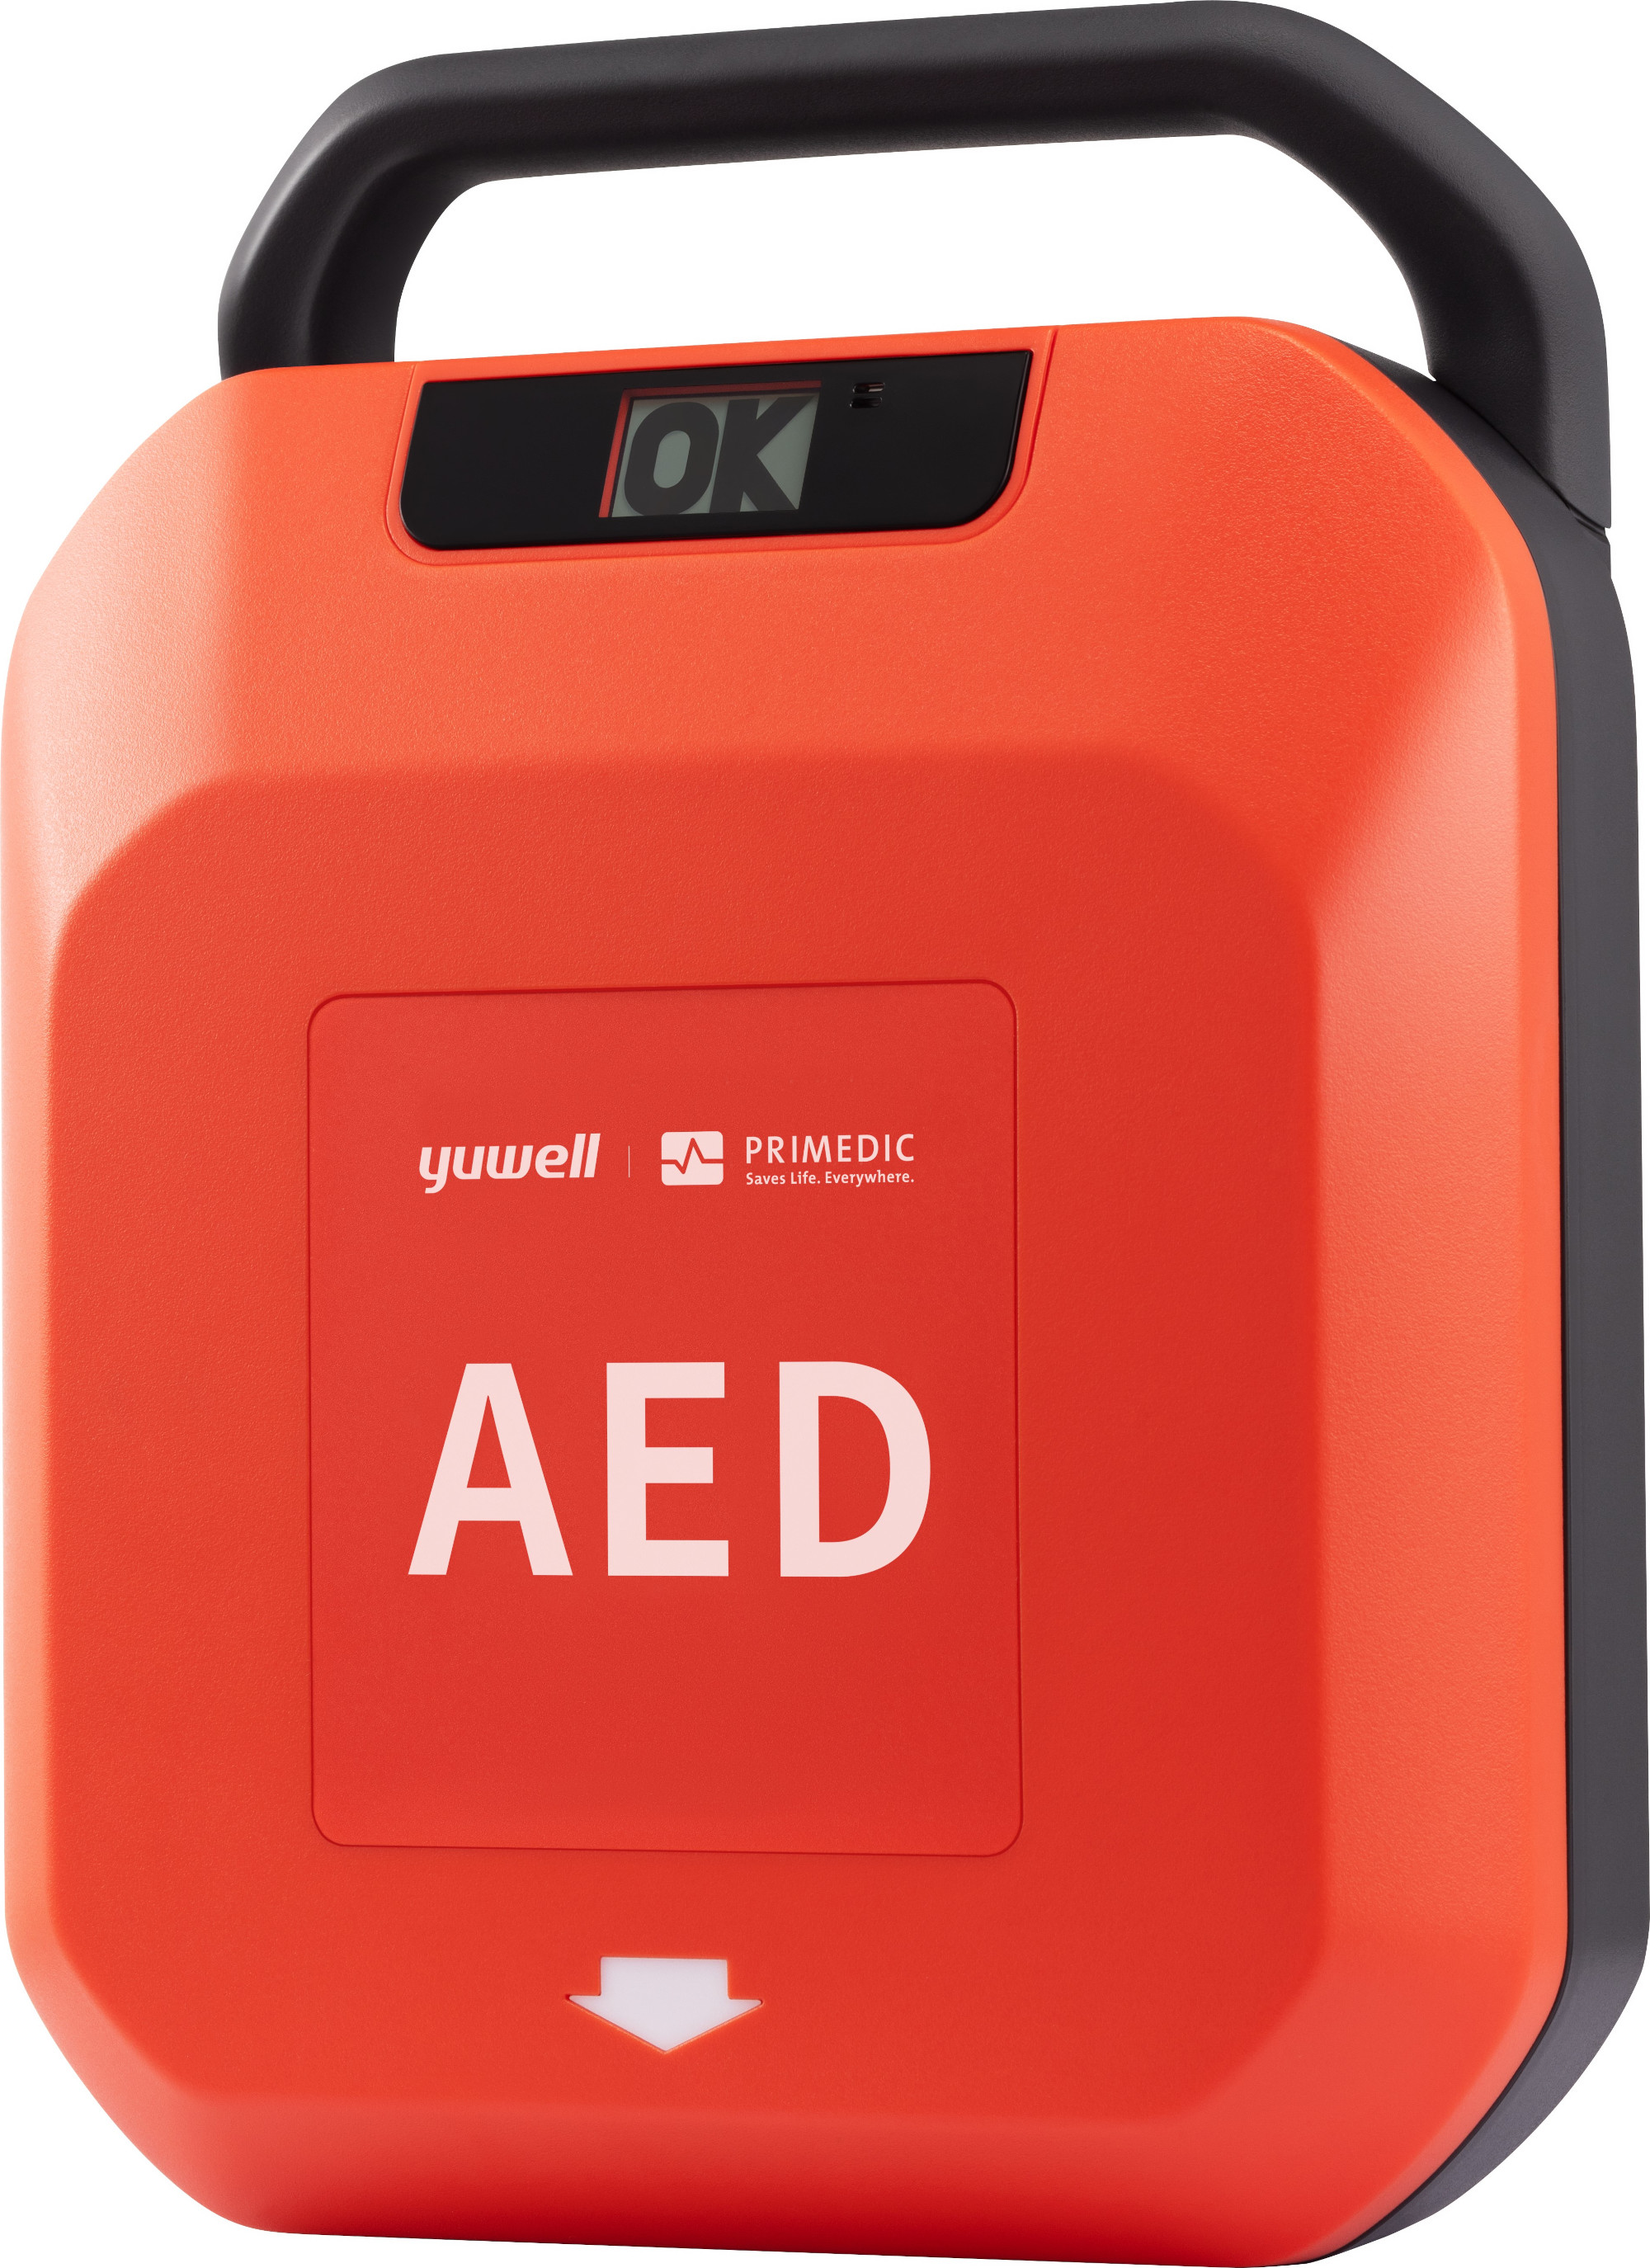 https://aed-defibrillator.kaufen/media/image/63/7c/1a/HeartSave_Y_YA_links_2000x2749.jpg